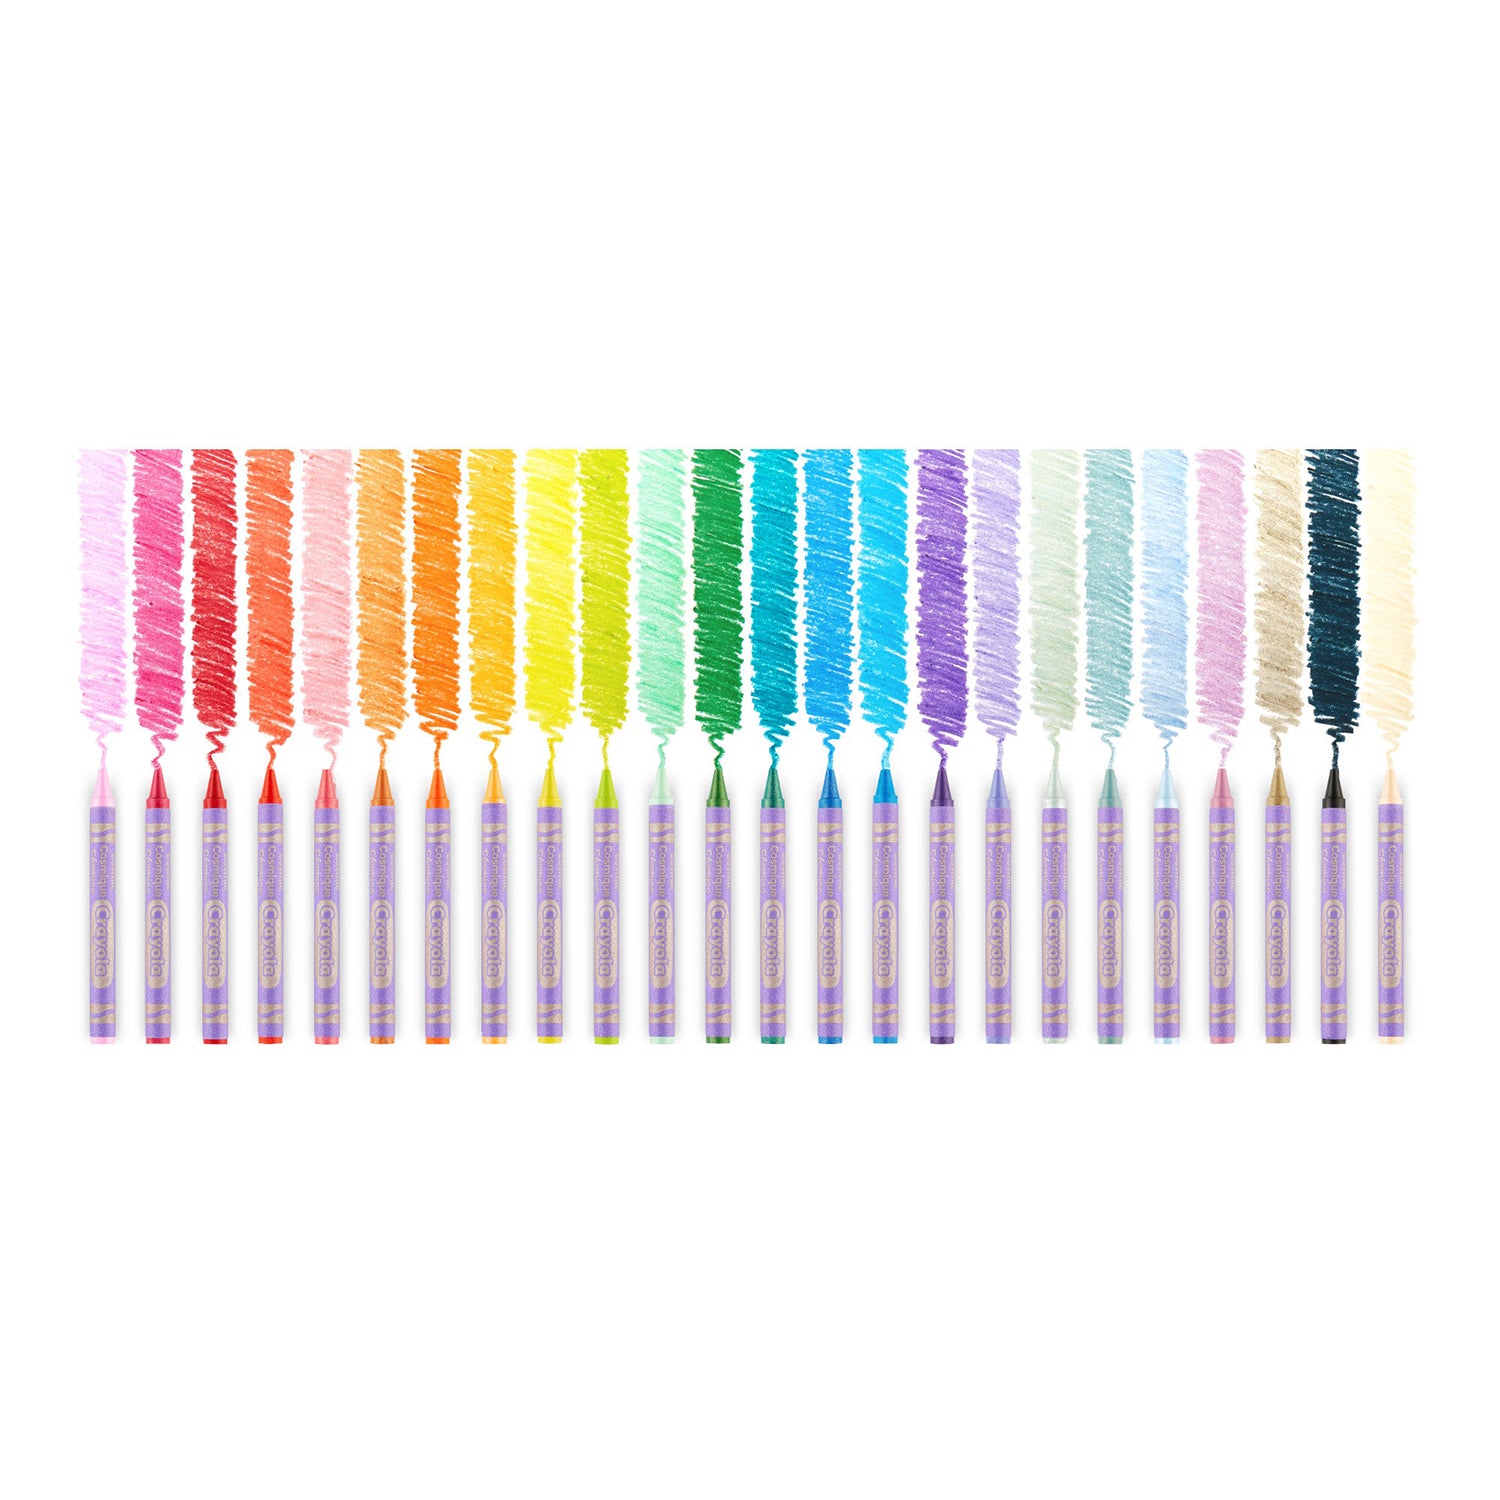 Crayola Glitter Crayons 8 Count